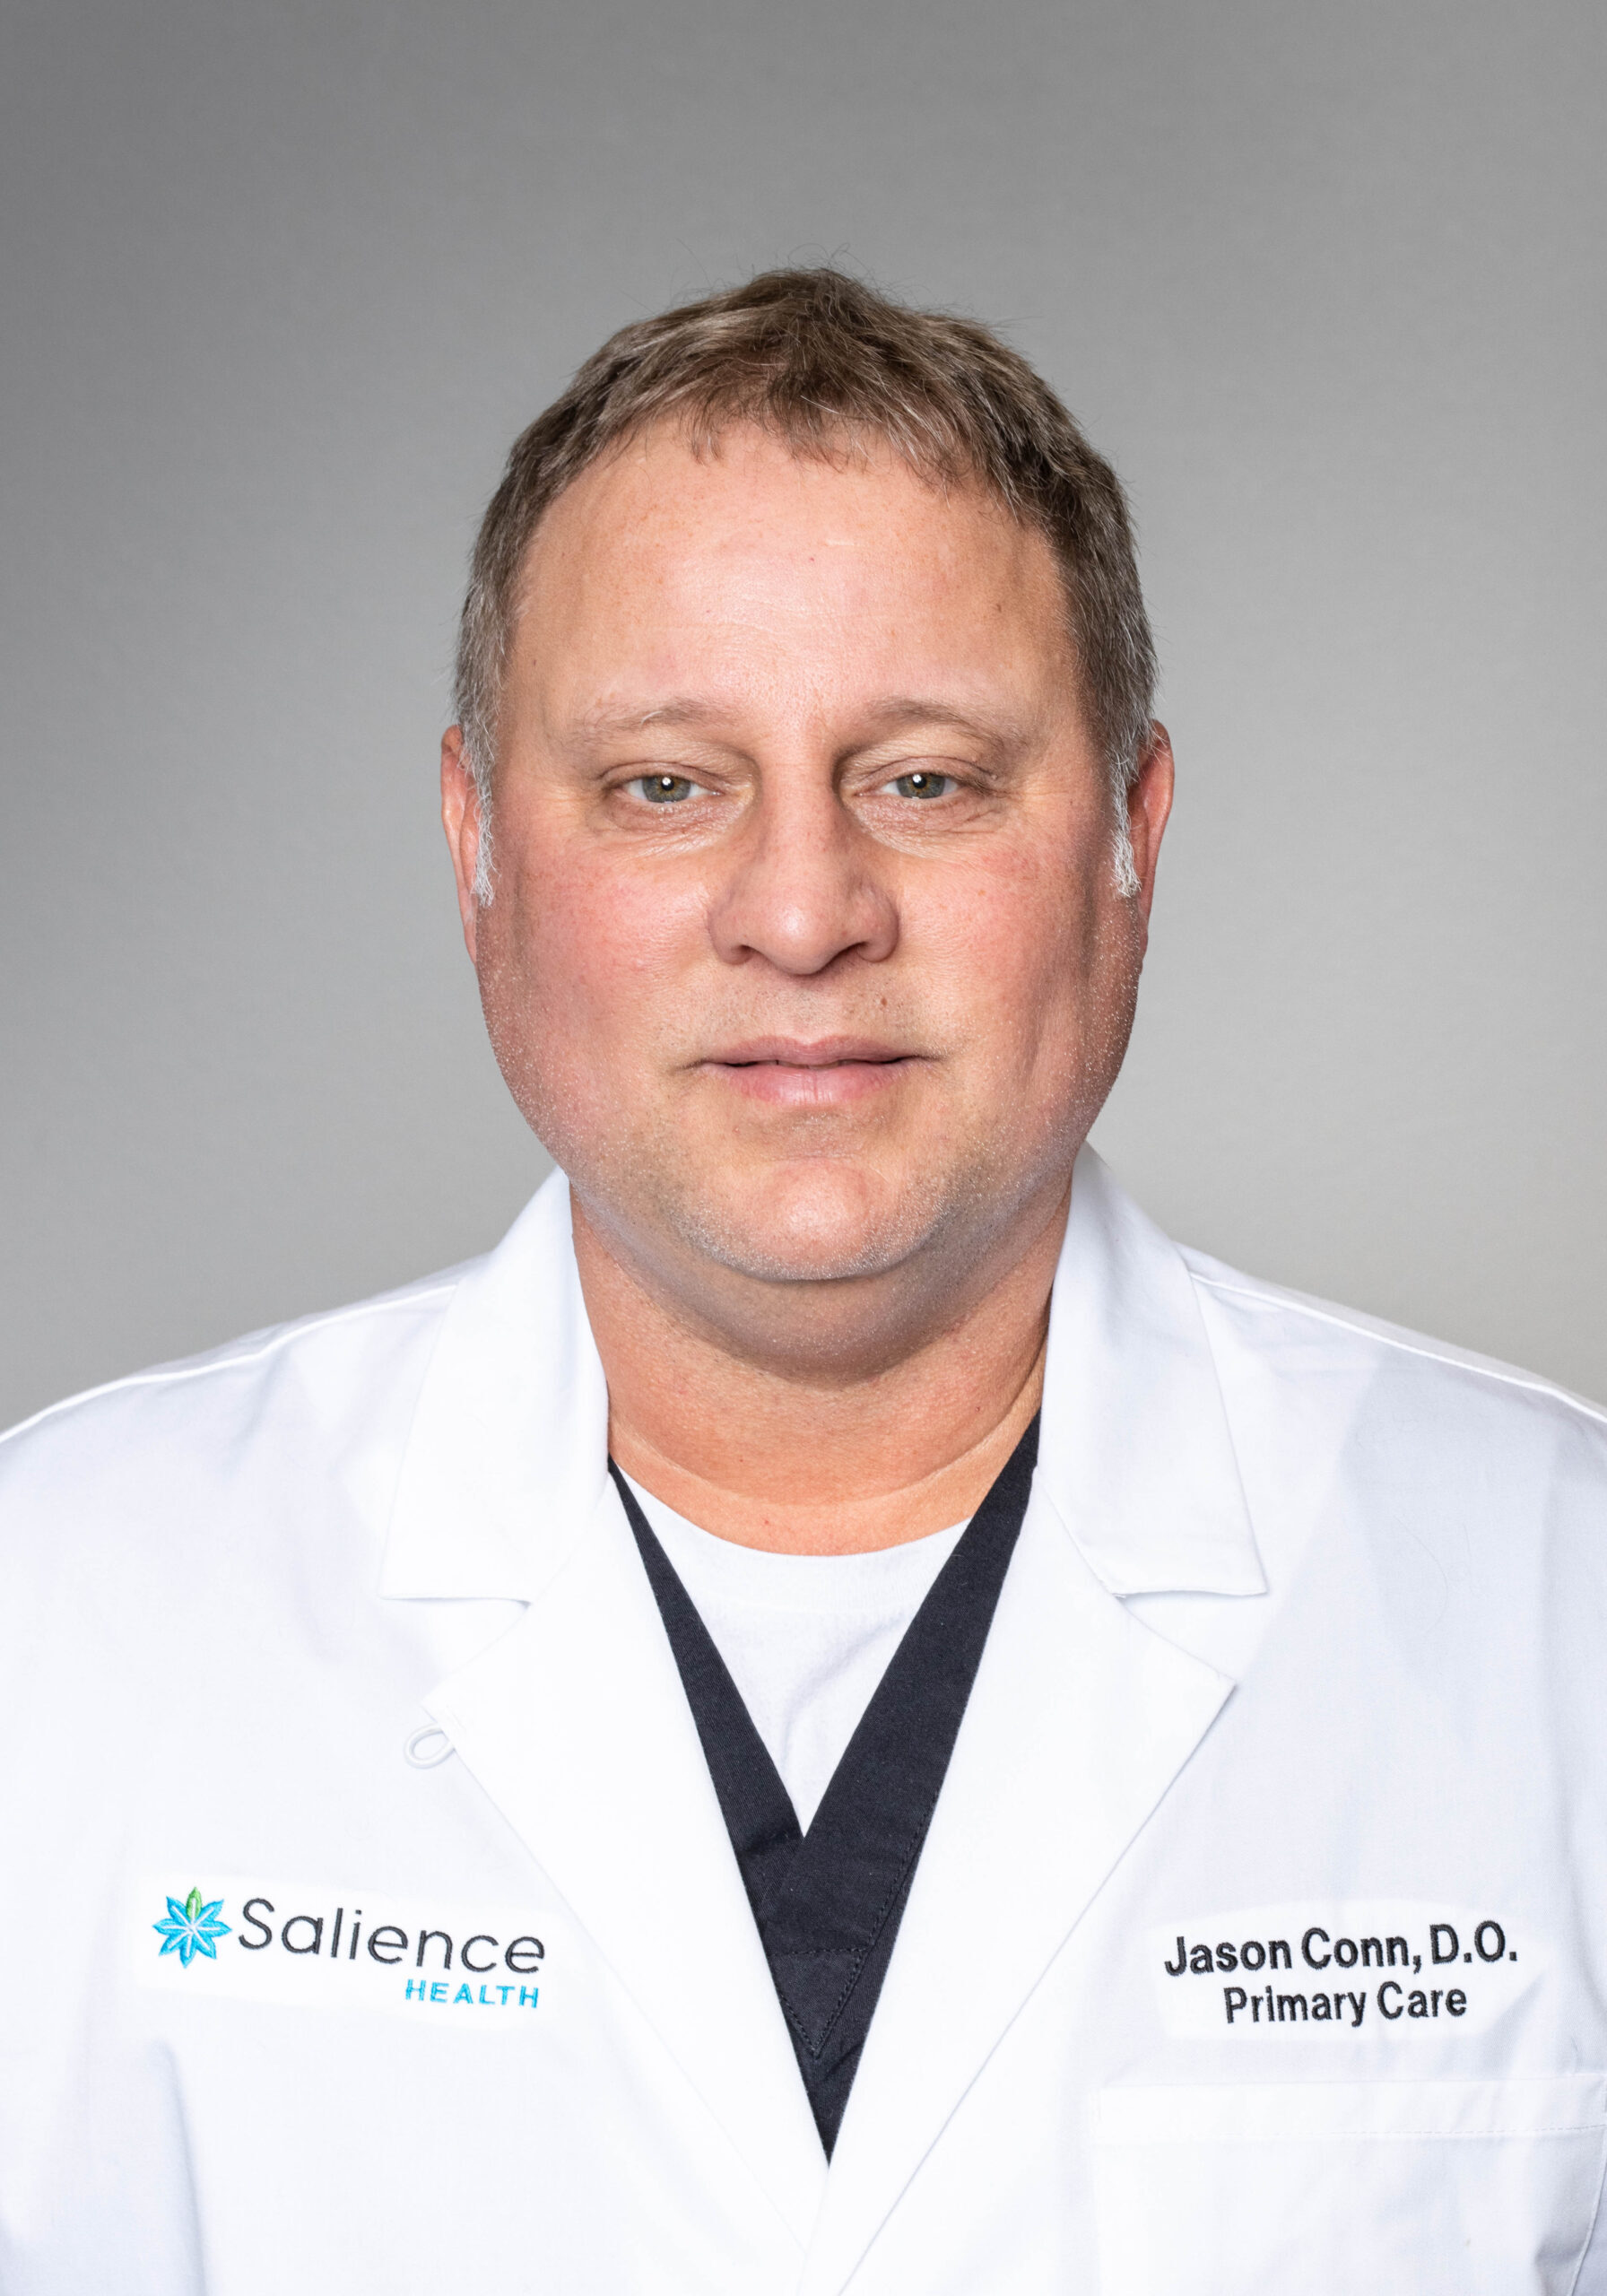 Jason Conn, D.O. Primary Care Physician at Salience Health